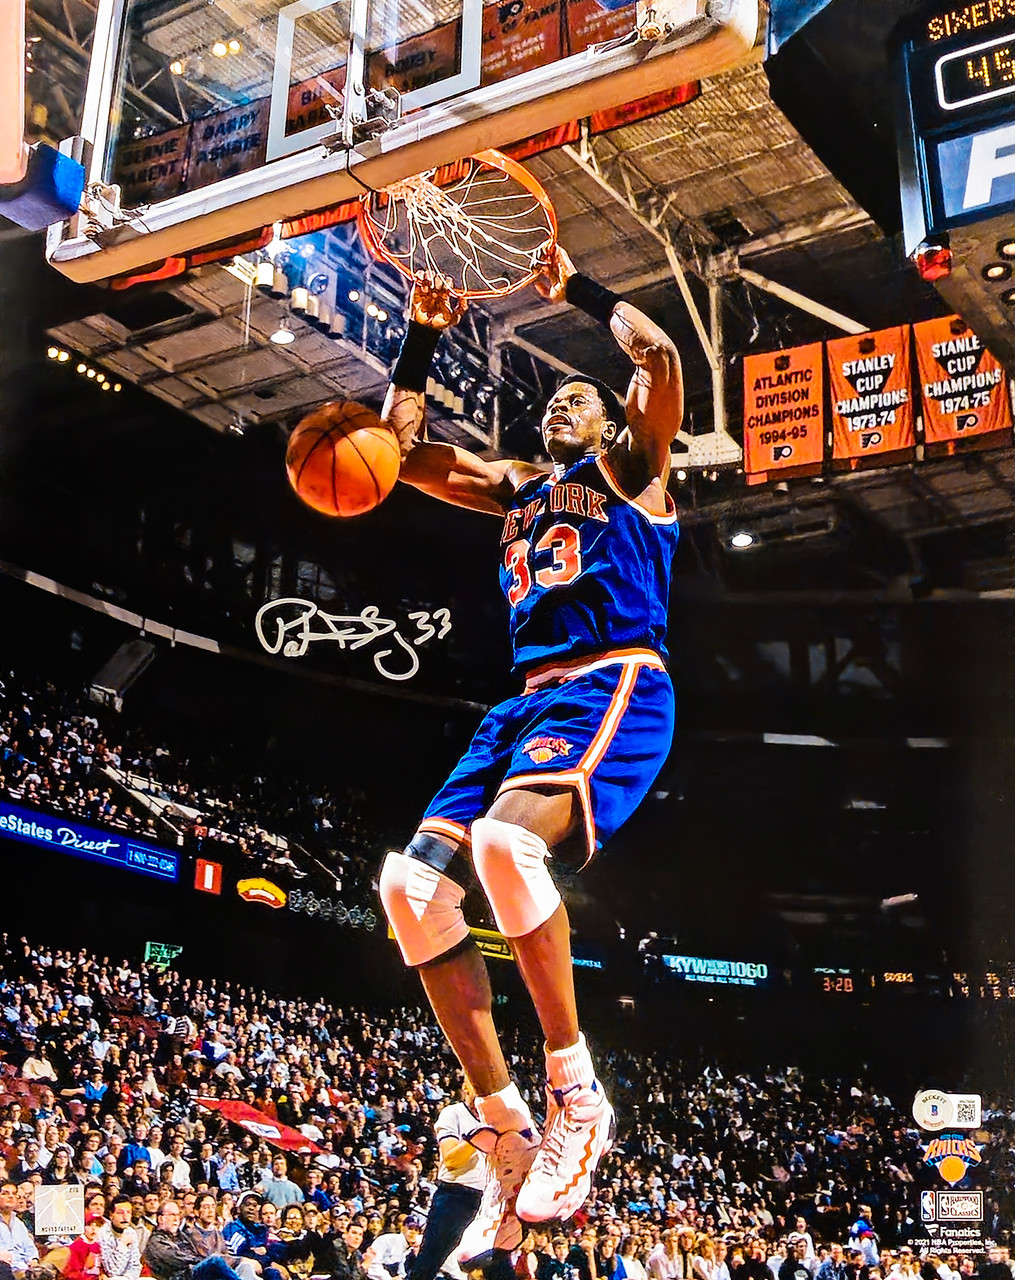 Patrick Ewing Autographed 16x20 Photo New York Knicks Beckett